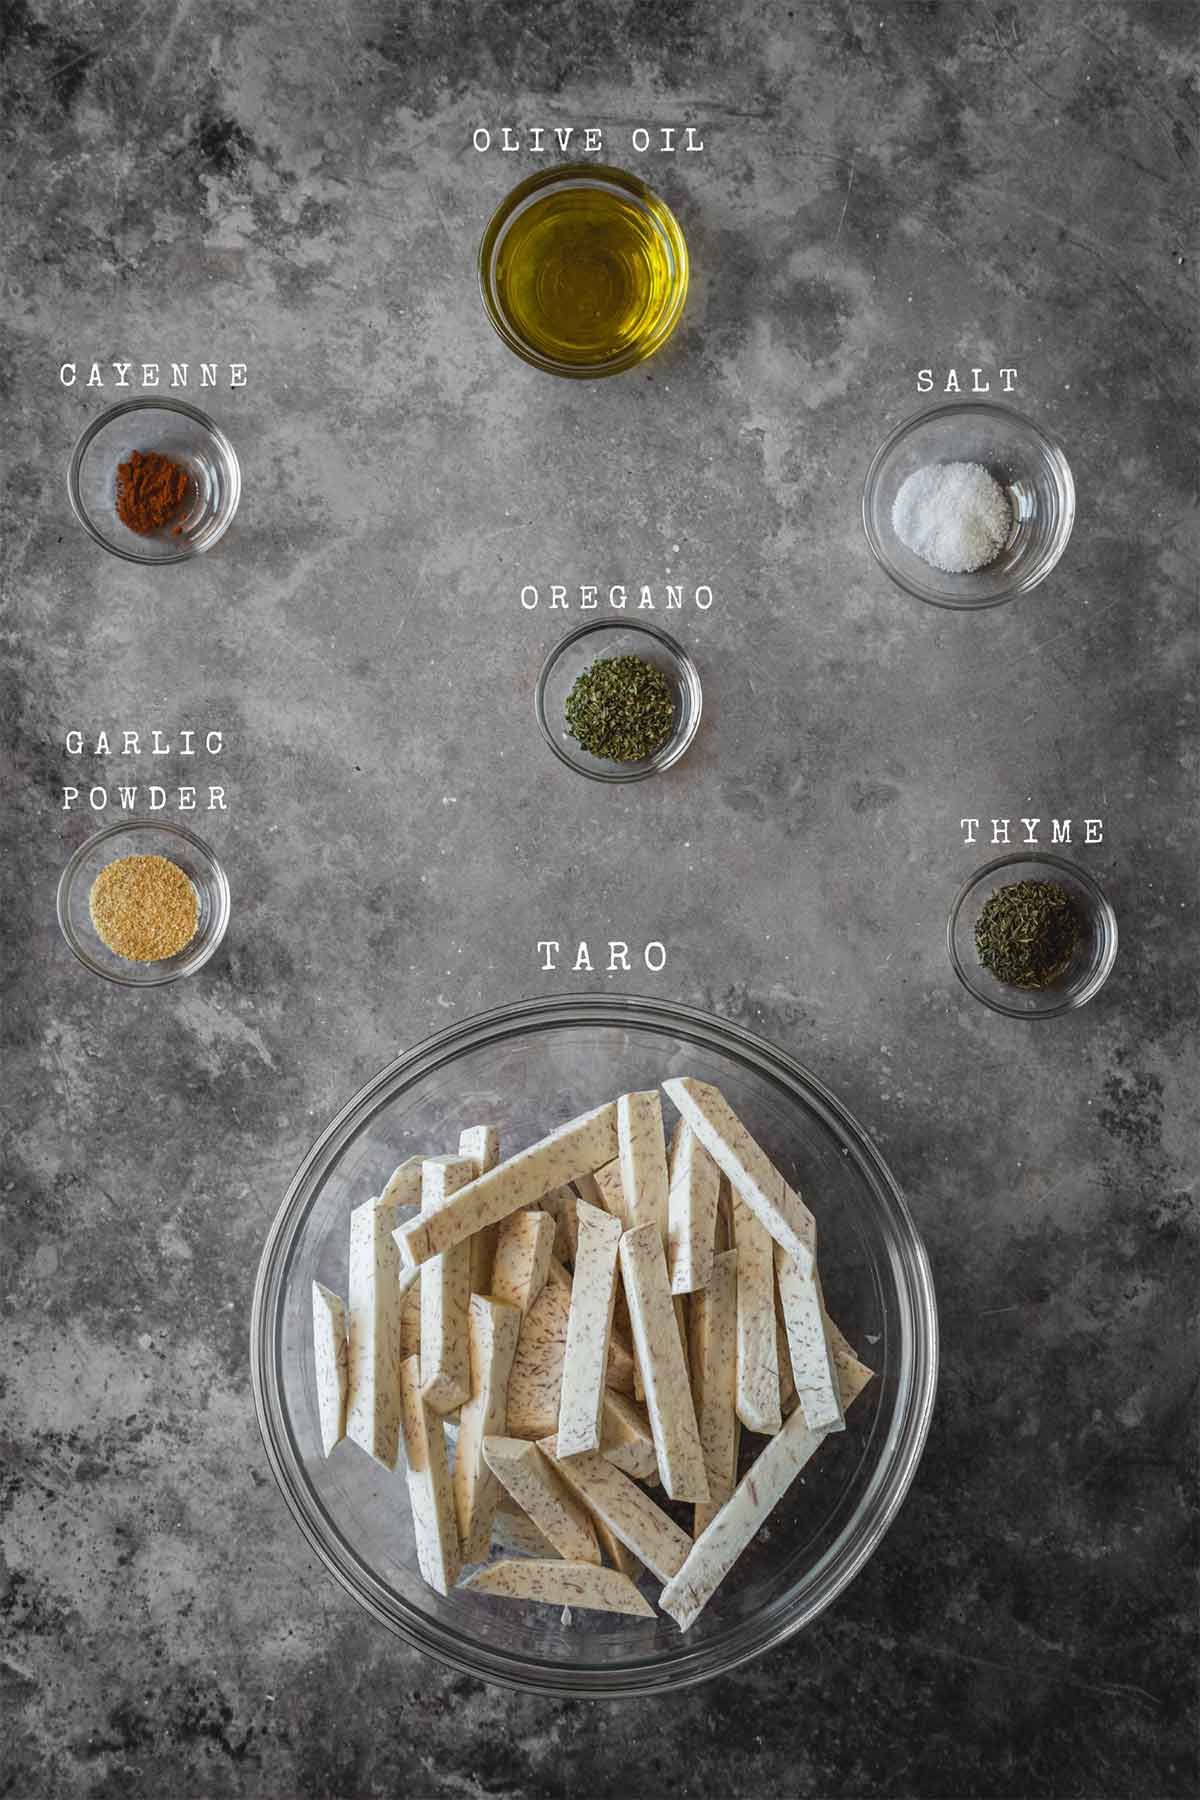 Ingredients for crispy taro